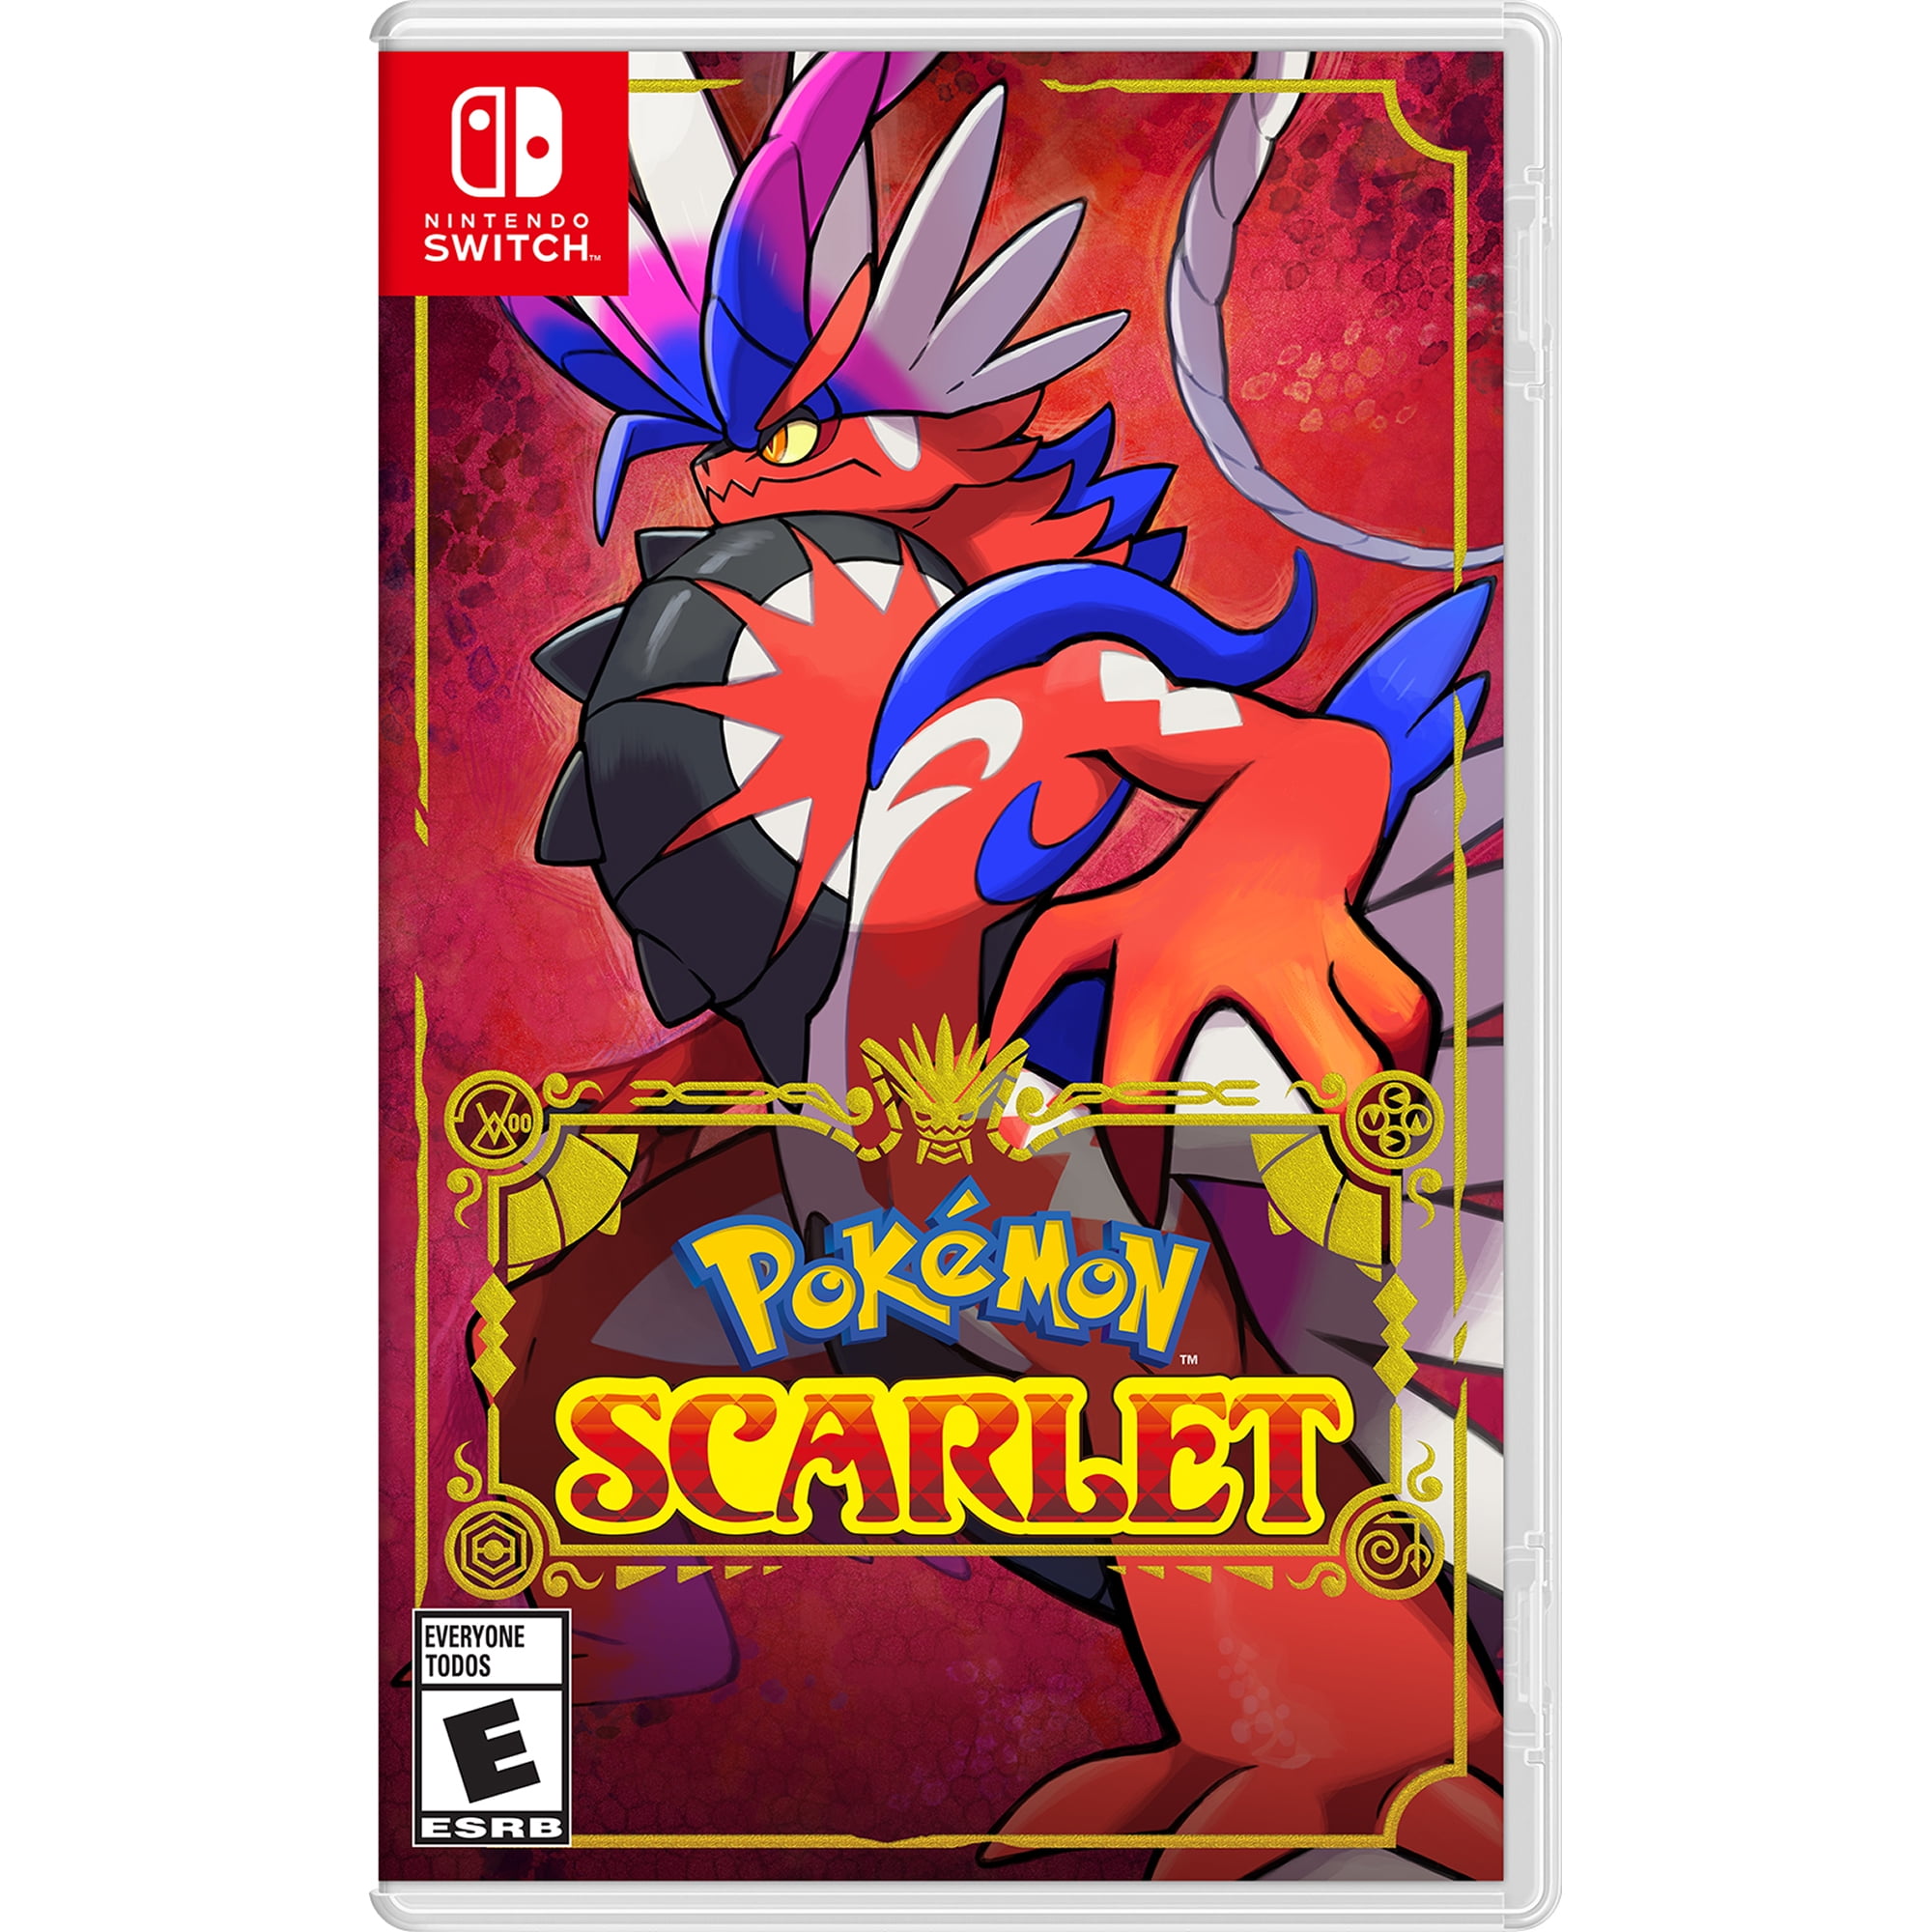 Pokemon Scarlet - Nintendo Switch (Physical Copy)